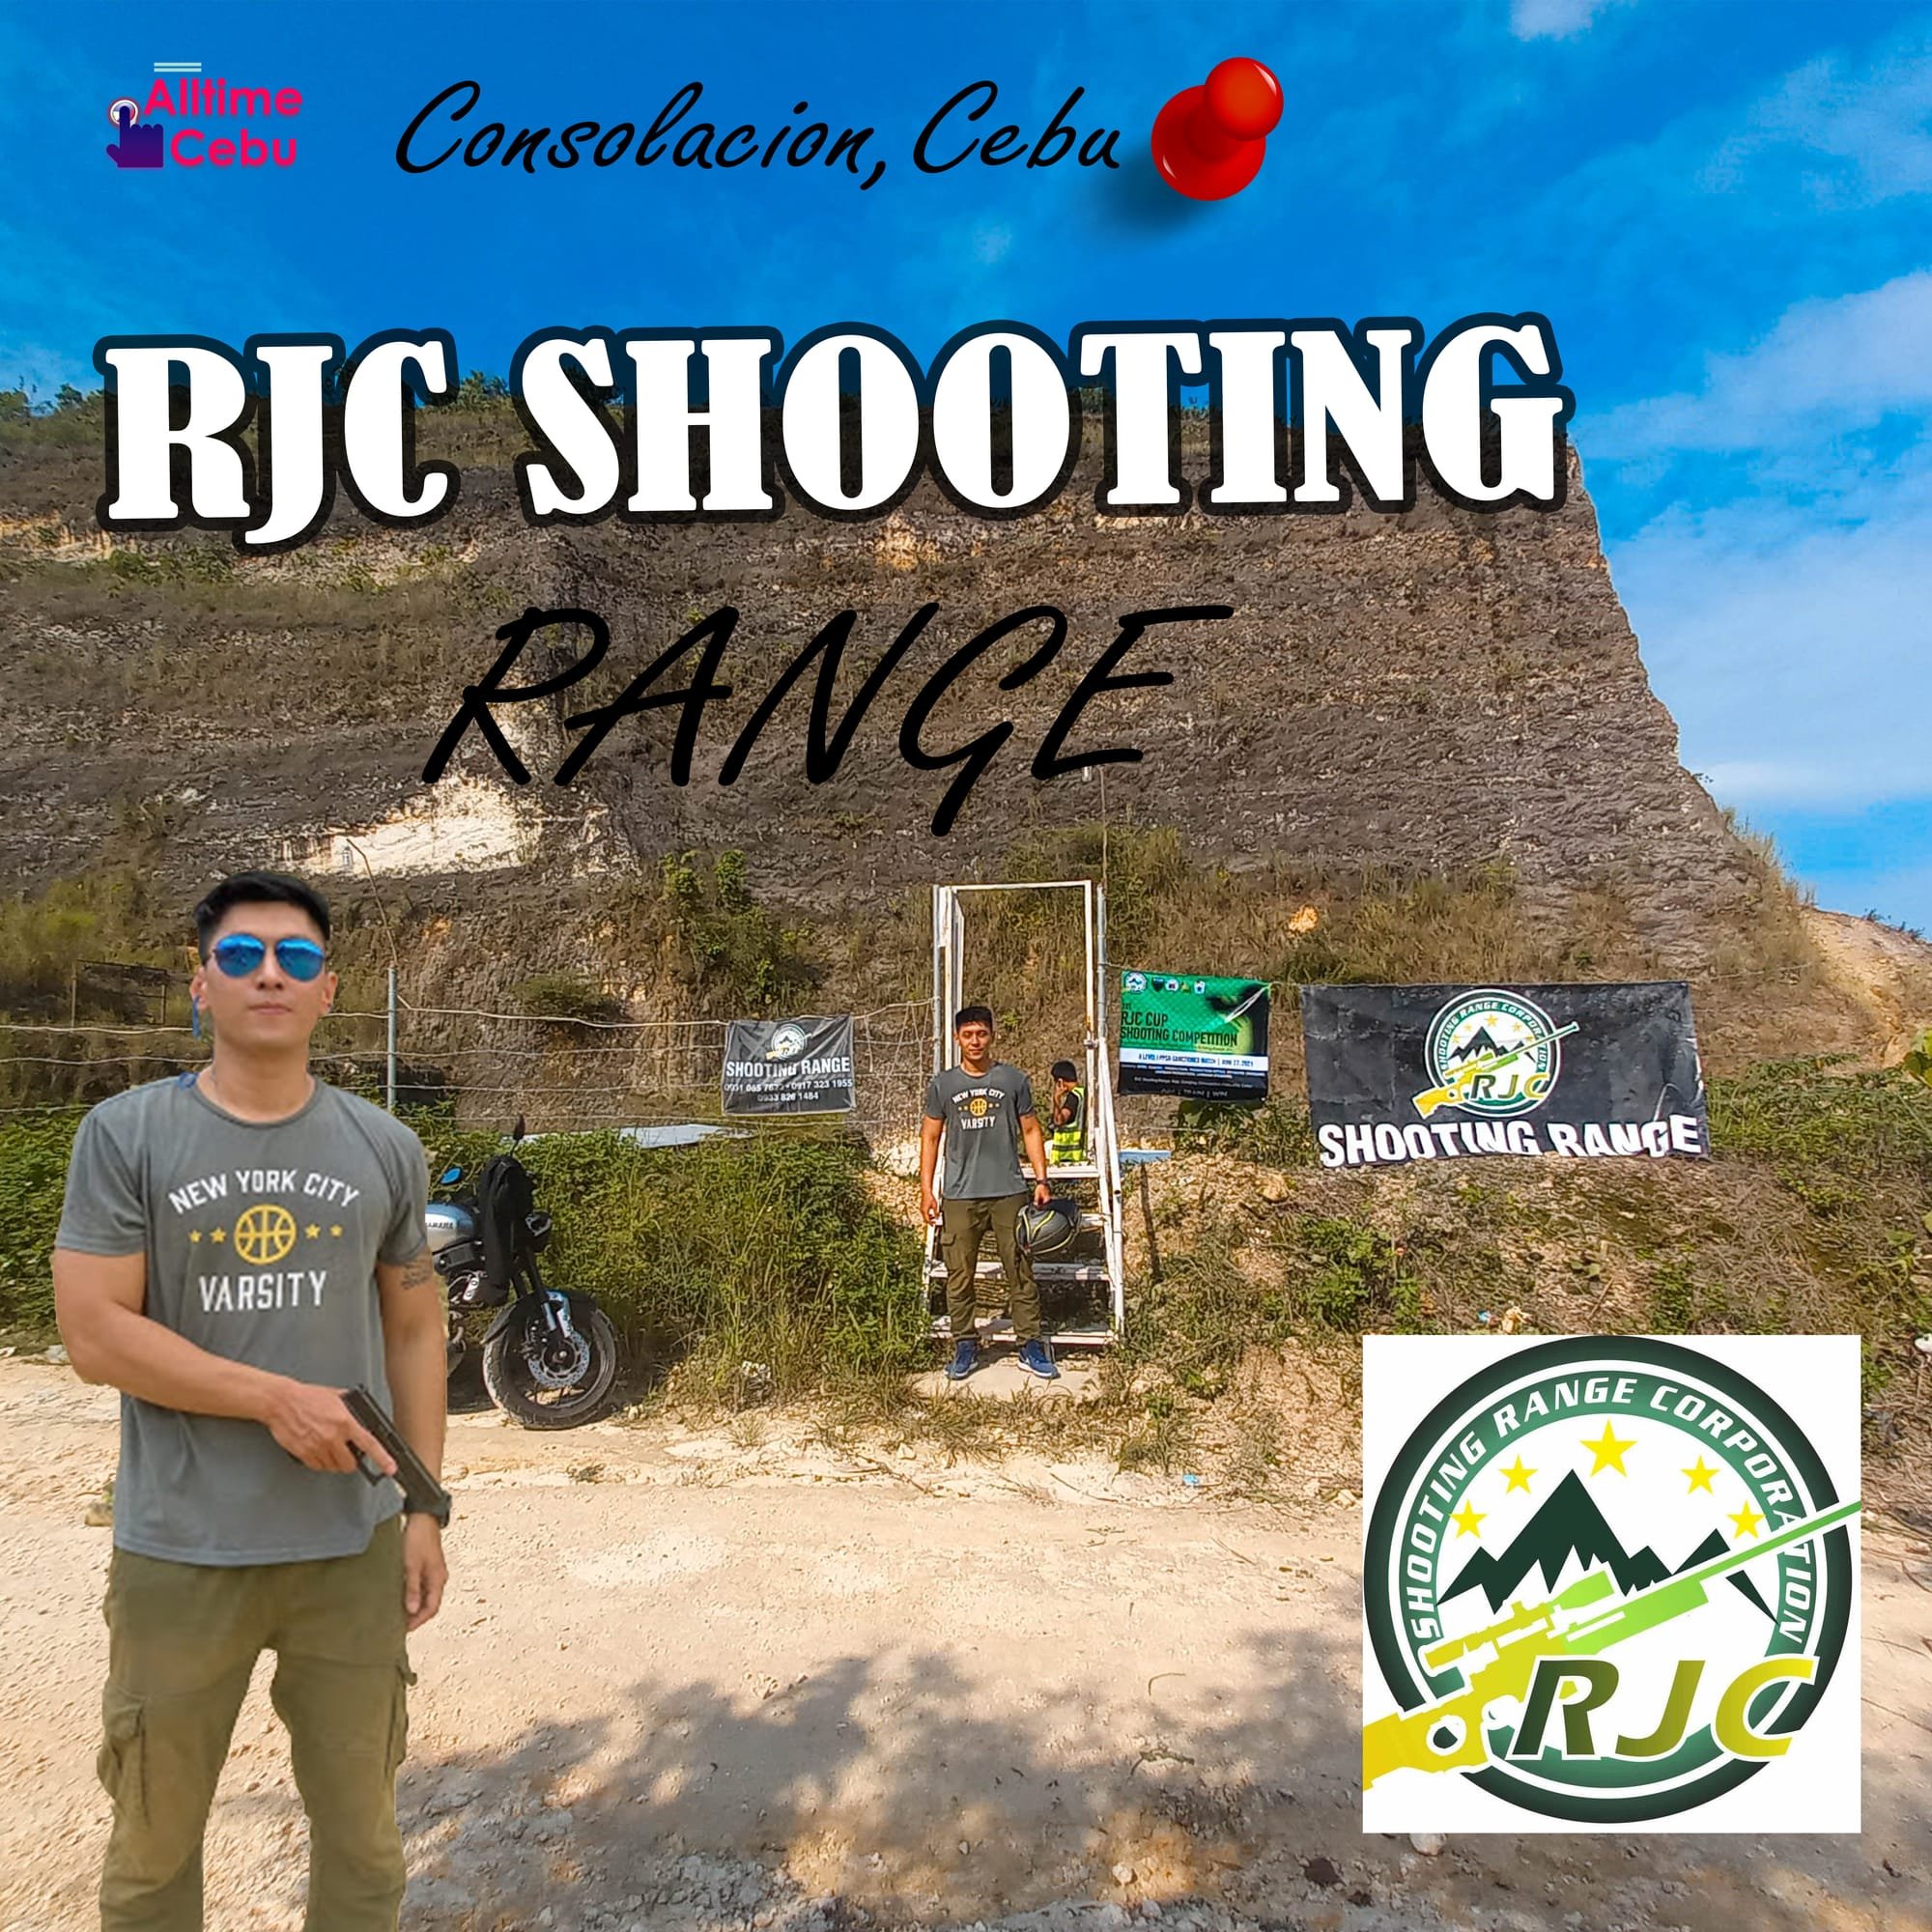 RJC Shooting Range: Beginner-friendly Firing Range in Consolacion, CEBU